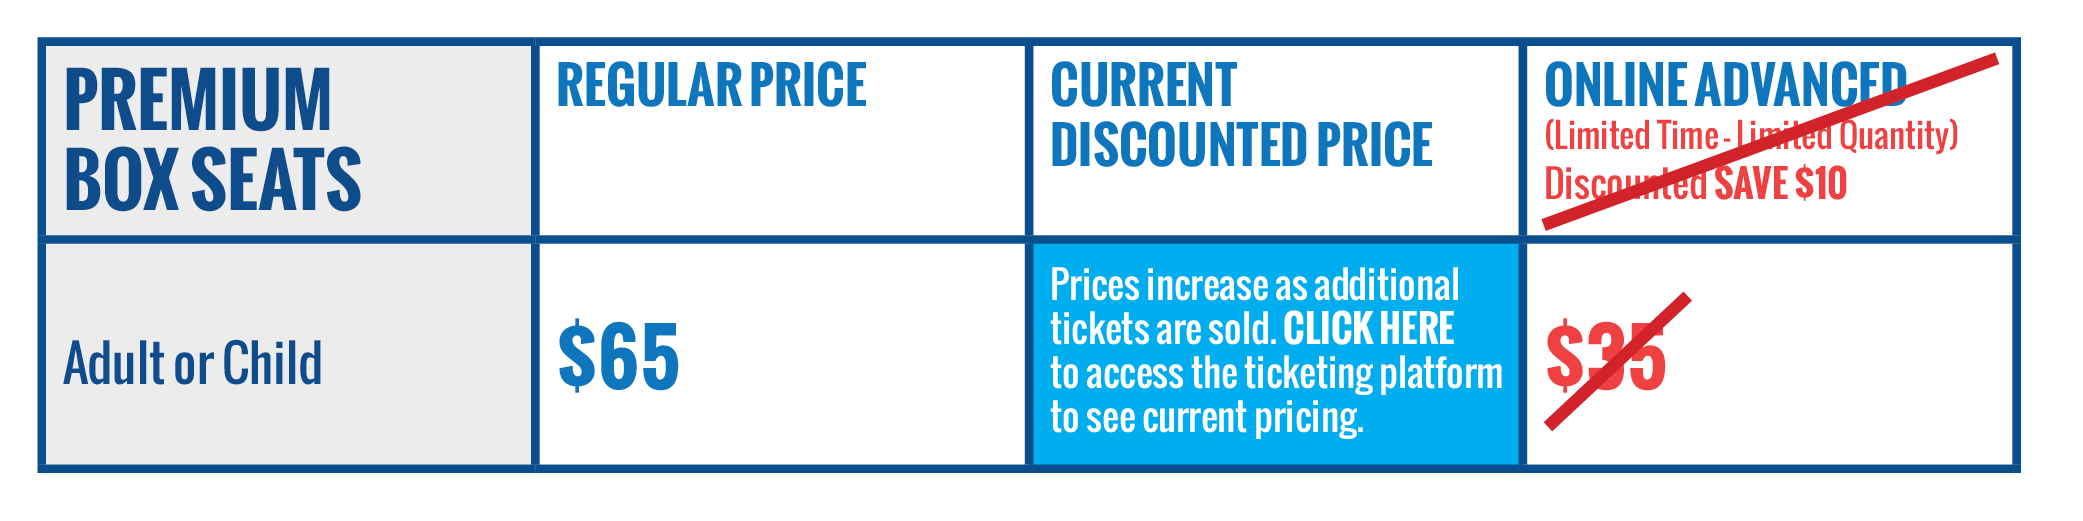 Premium Box Seats Ticket Chart - Reference Description